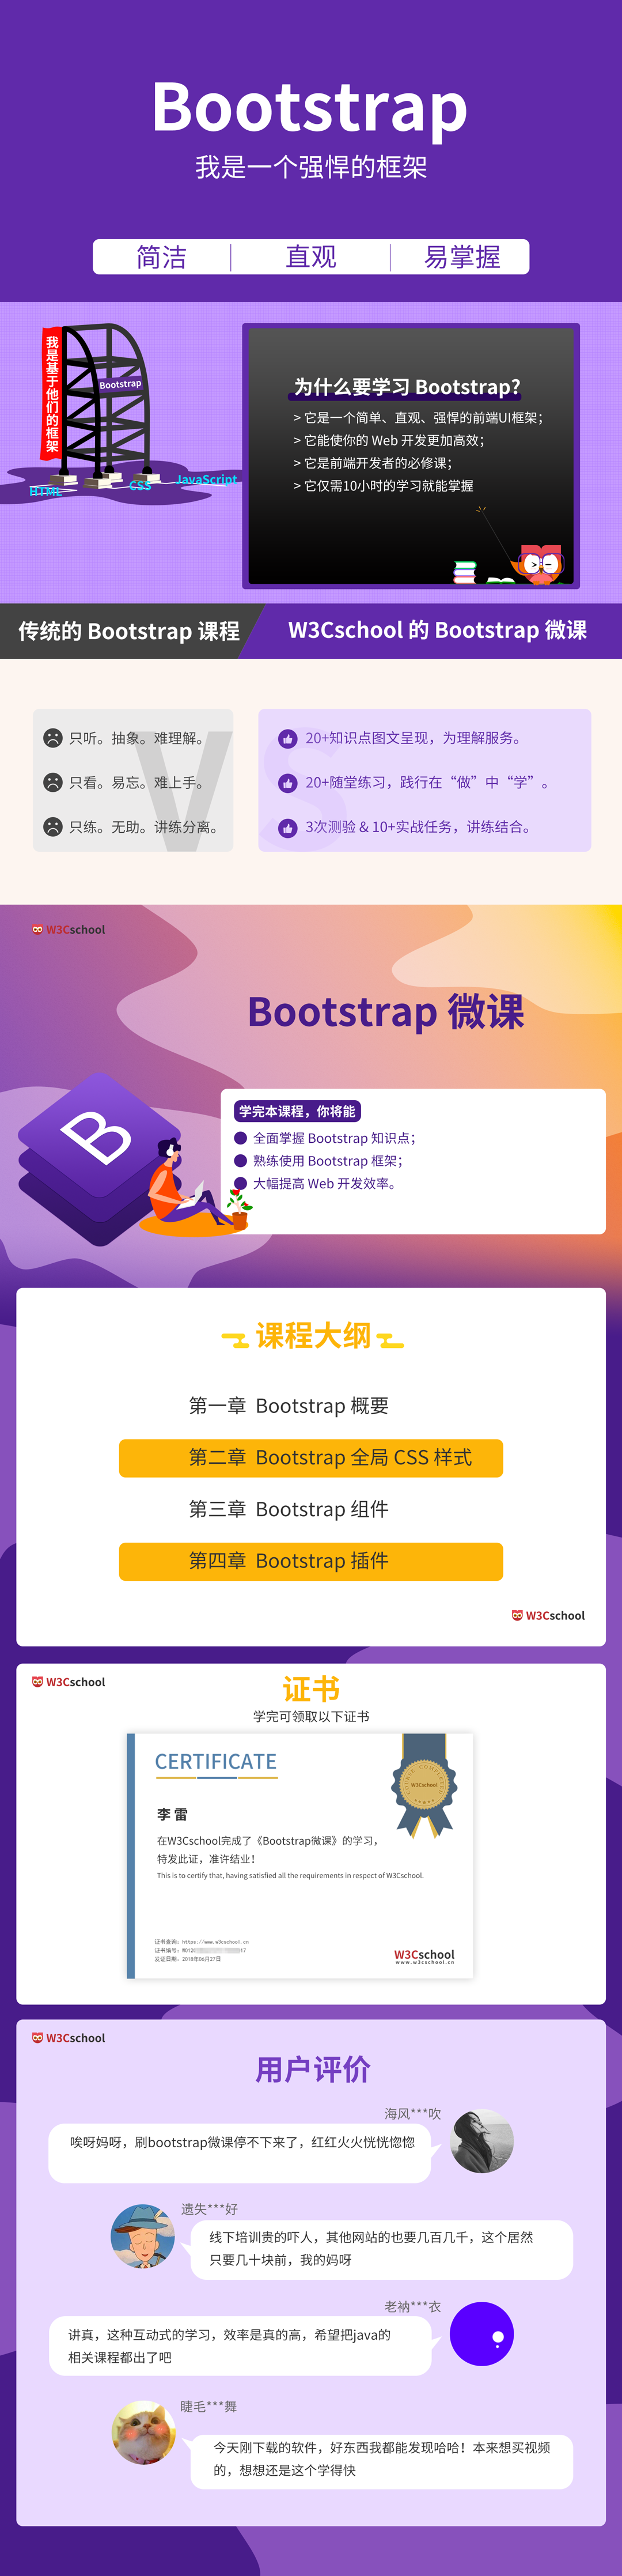 Bootstrap微課課程介紹